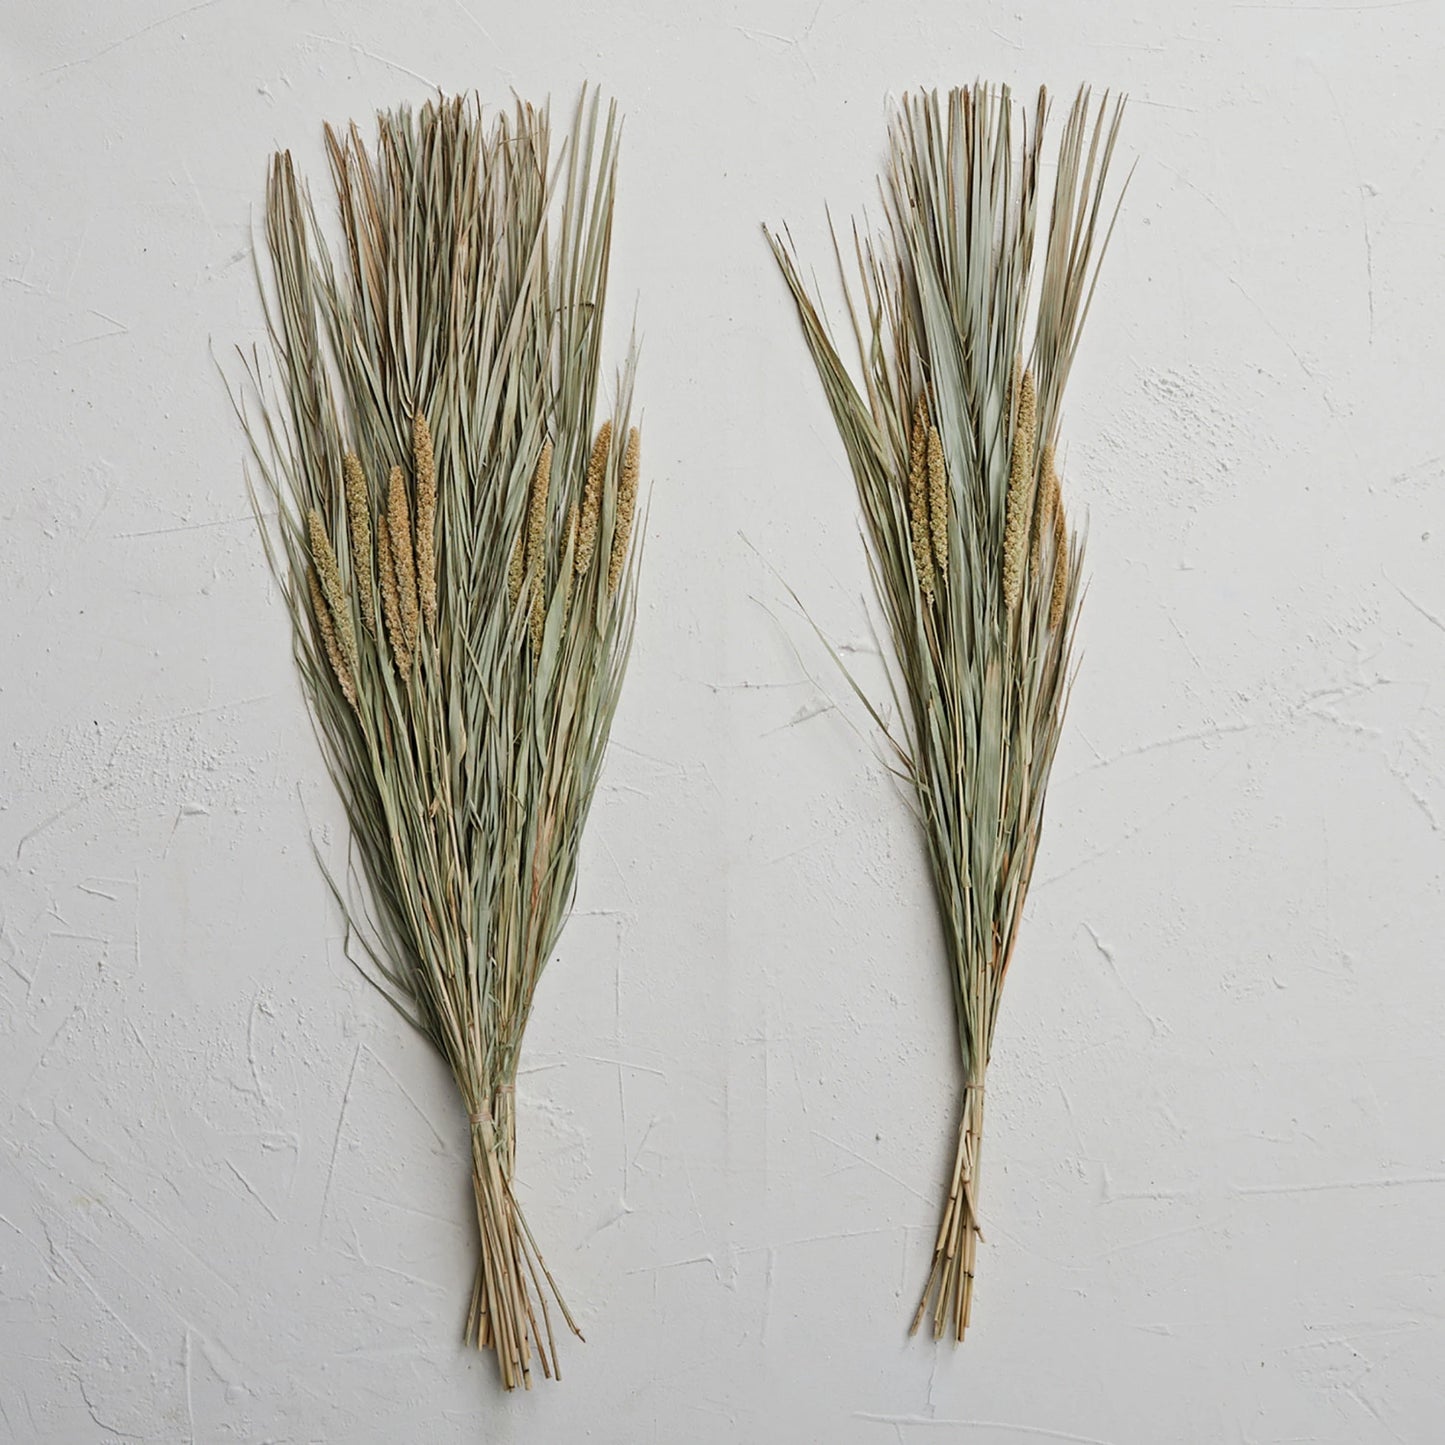 Dried Canary Grass & Date Palm